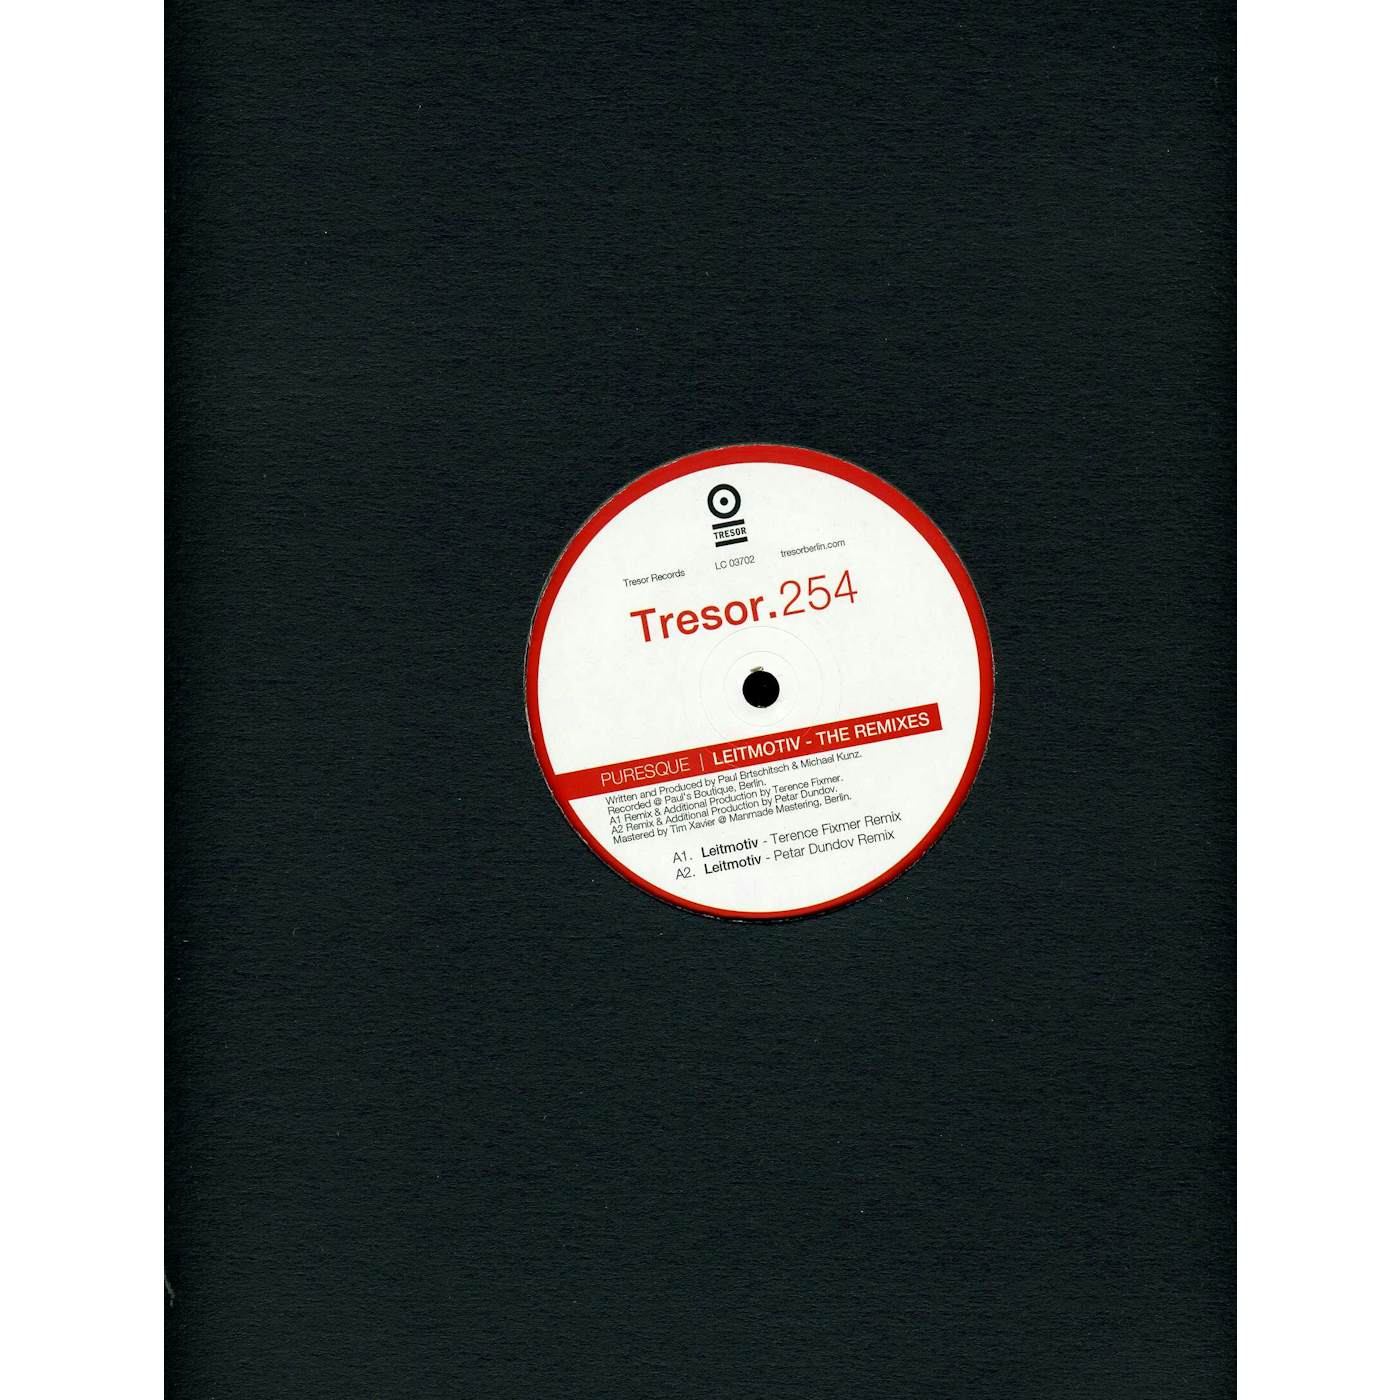 Puresque Leitmotiv - The Remixes Vinyl Record